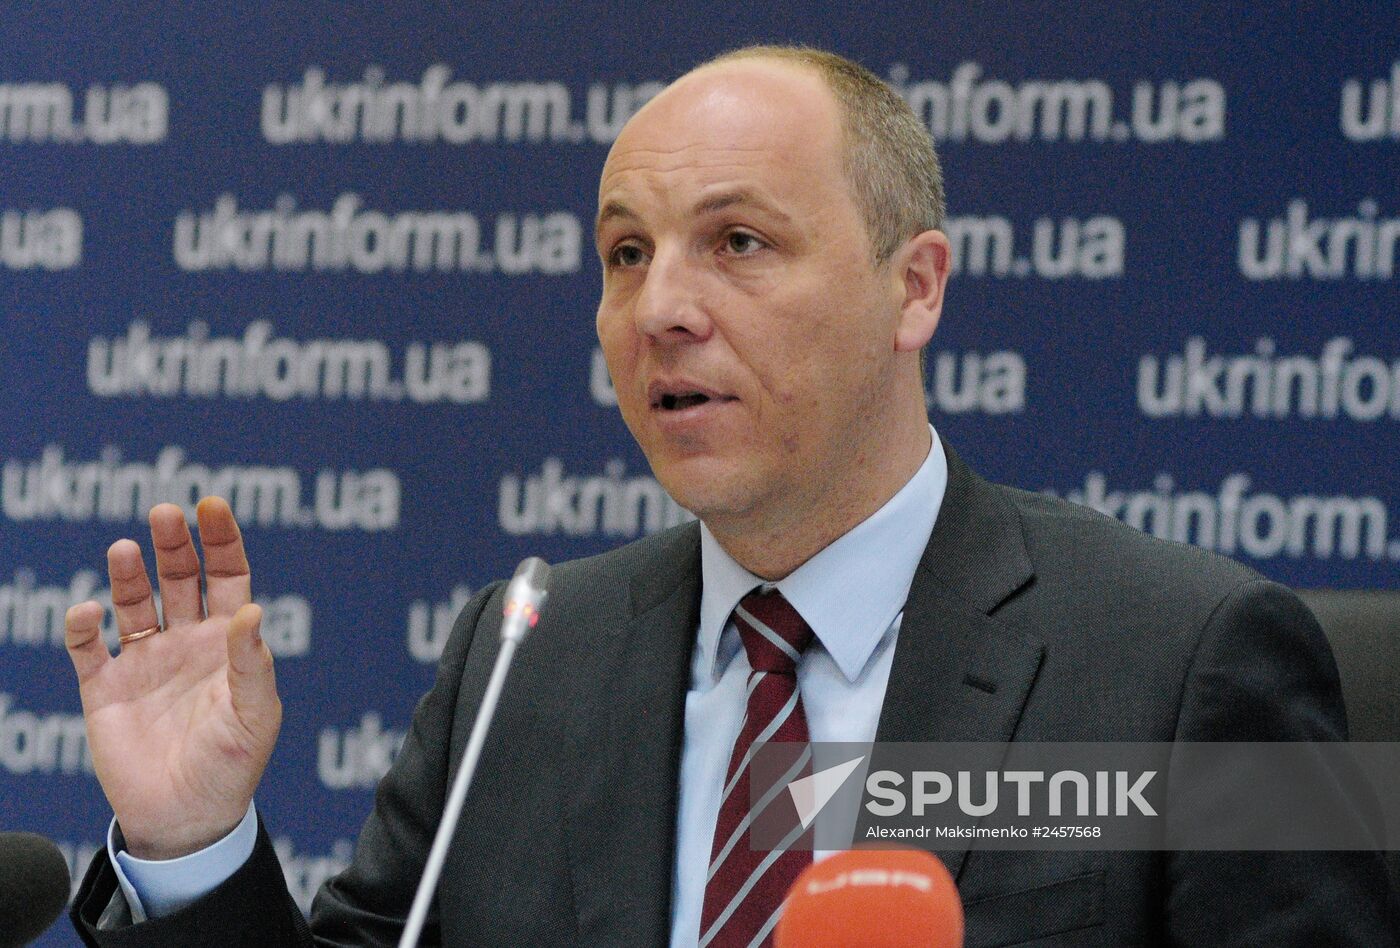 News conference "Summary of anti-terrorist operation in Ukraine"